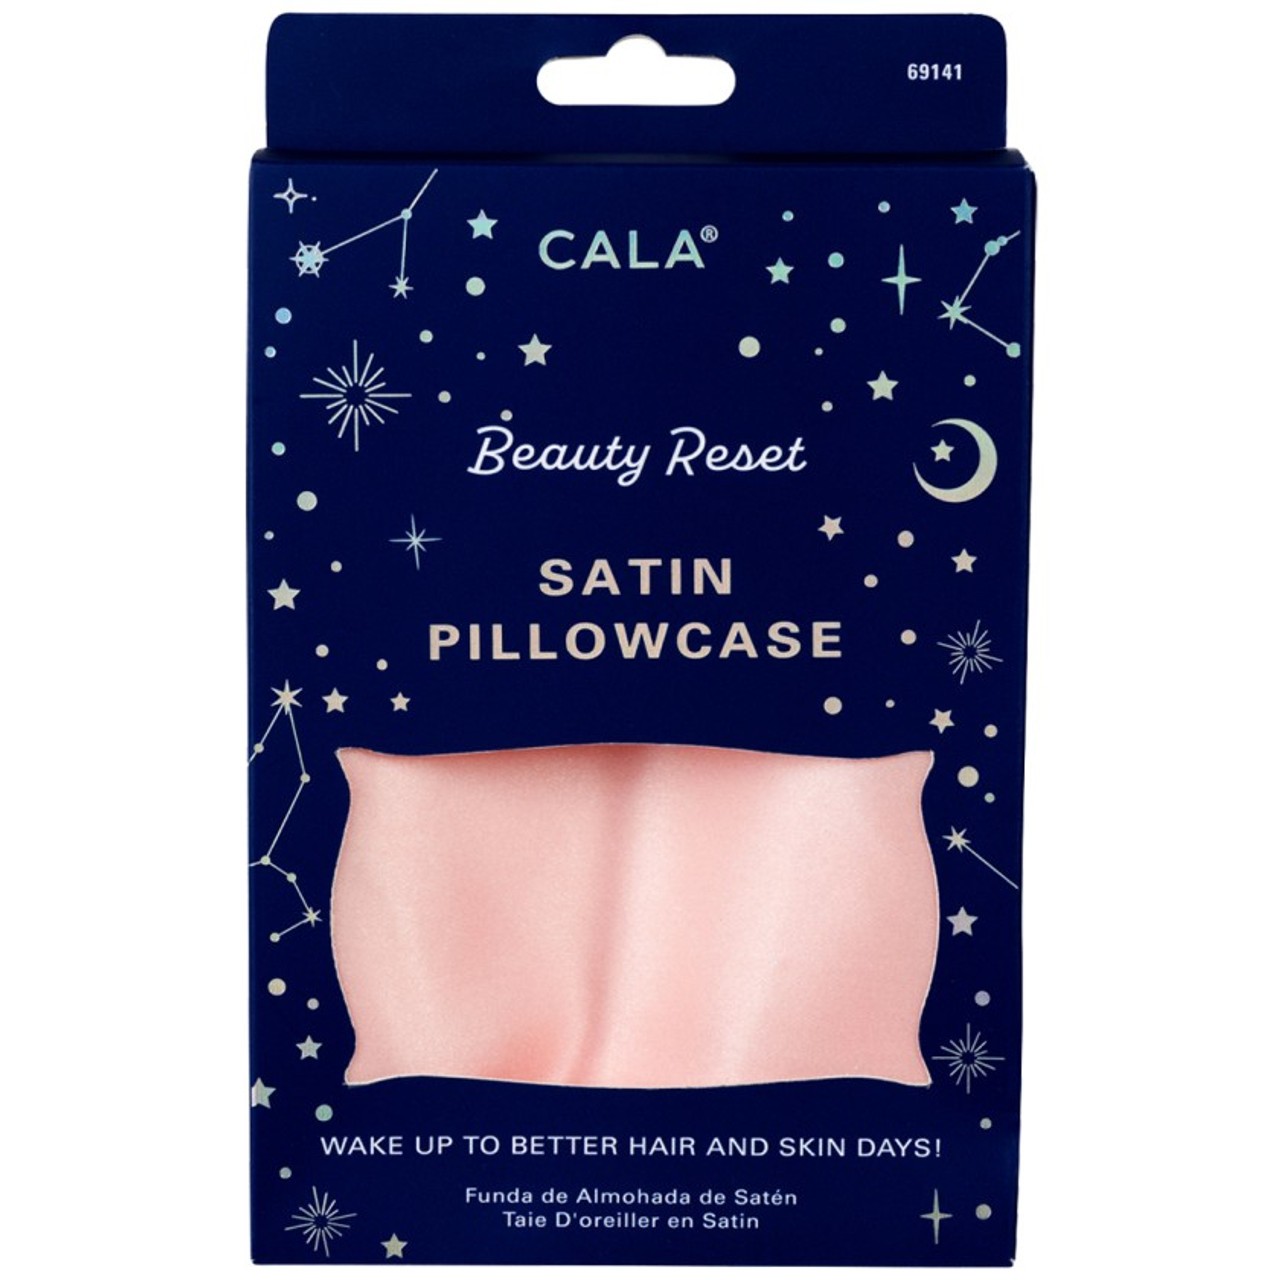 Cala Beauty Reset Satin Pillowcase (Blush)